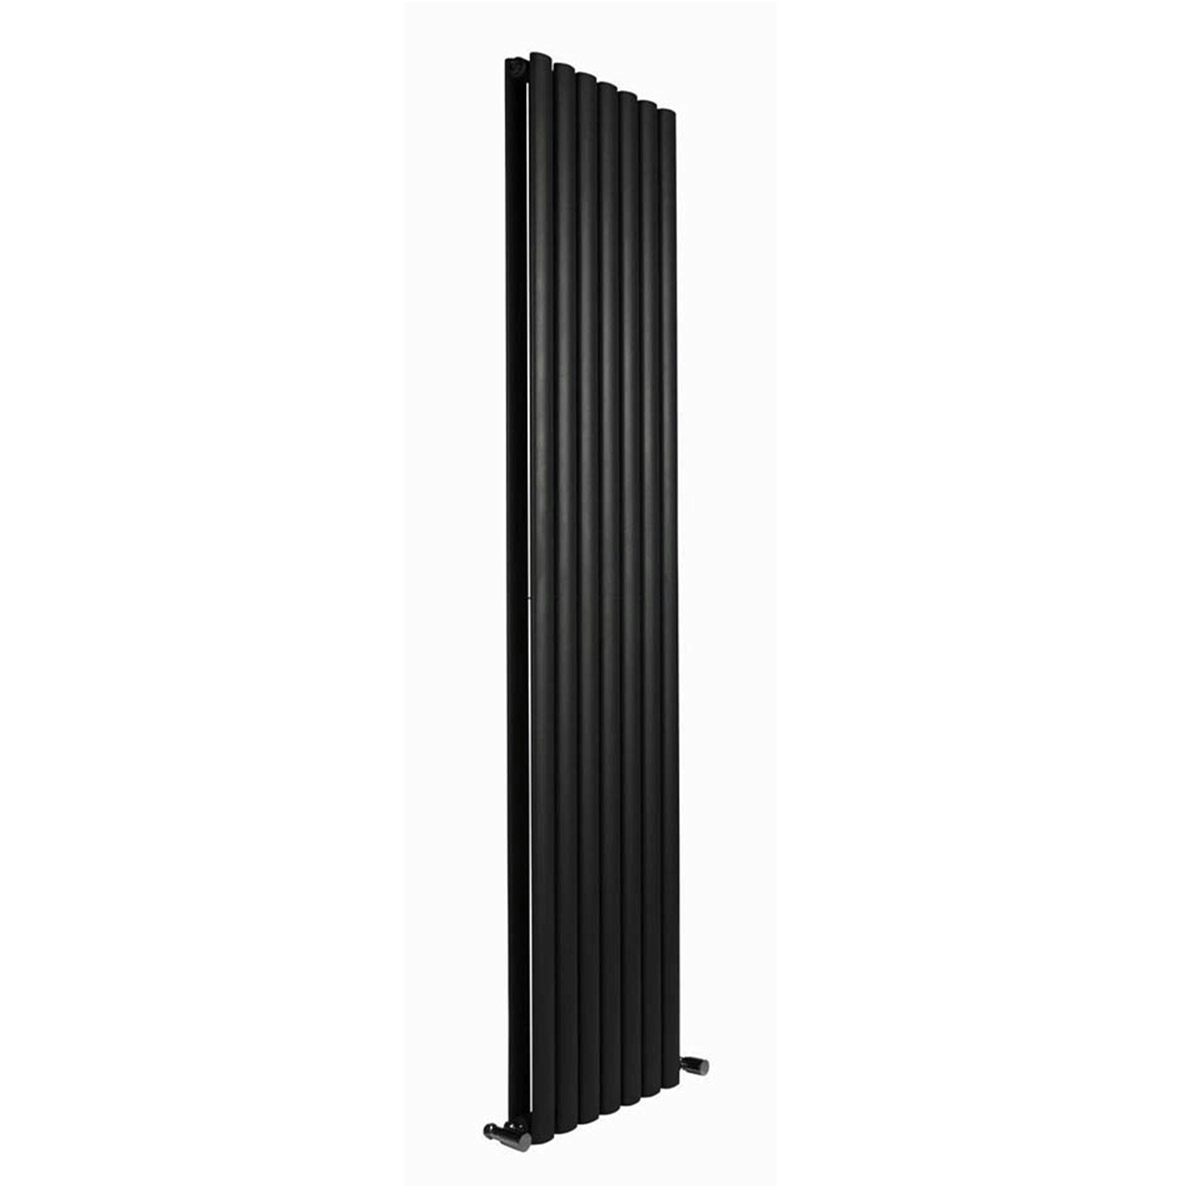 Reina Neva anthracite grey double vertical steel designer radiator 1500 x 413